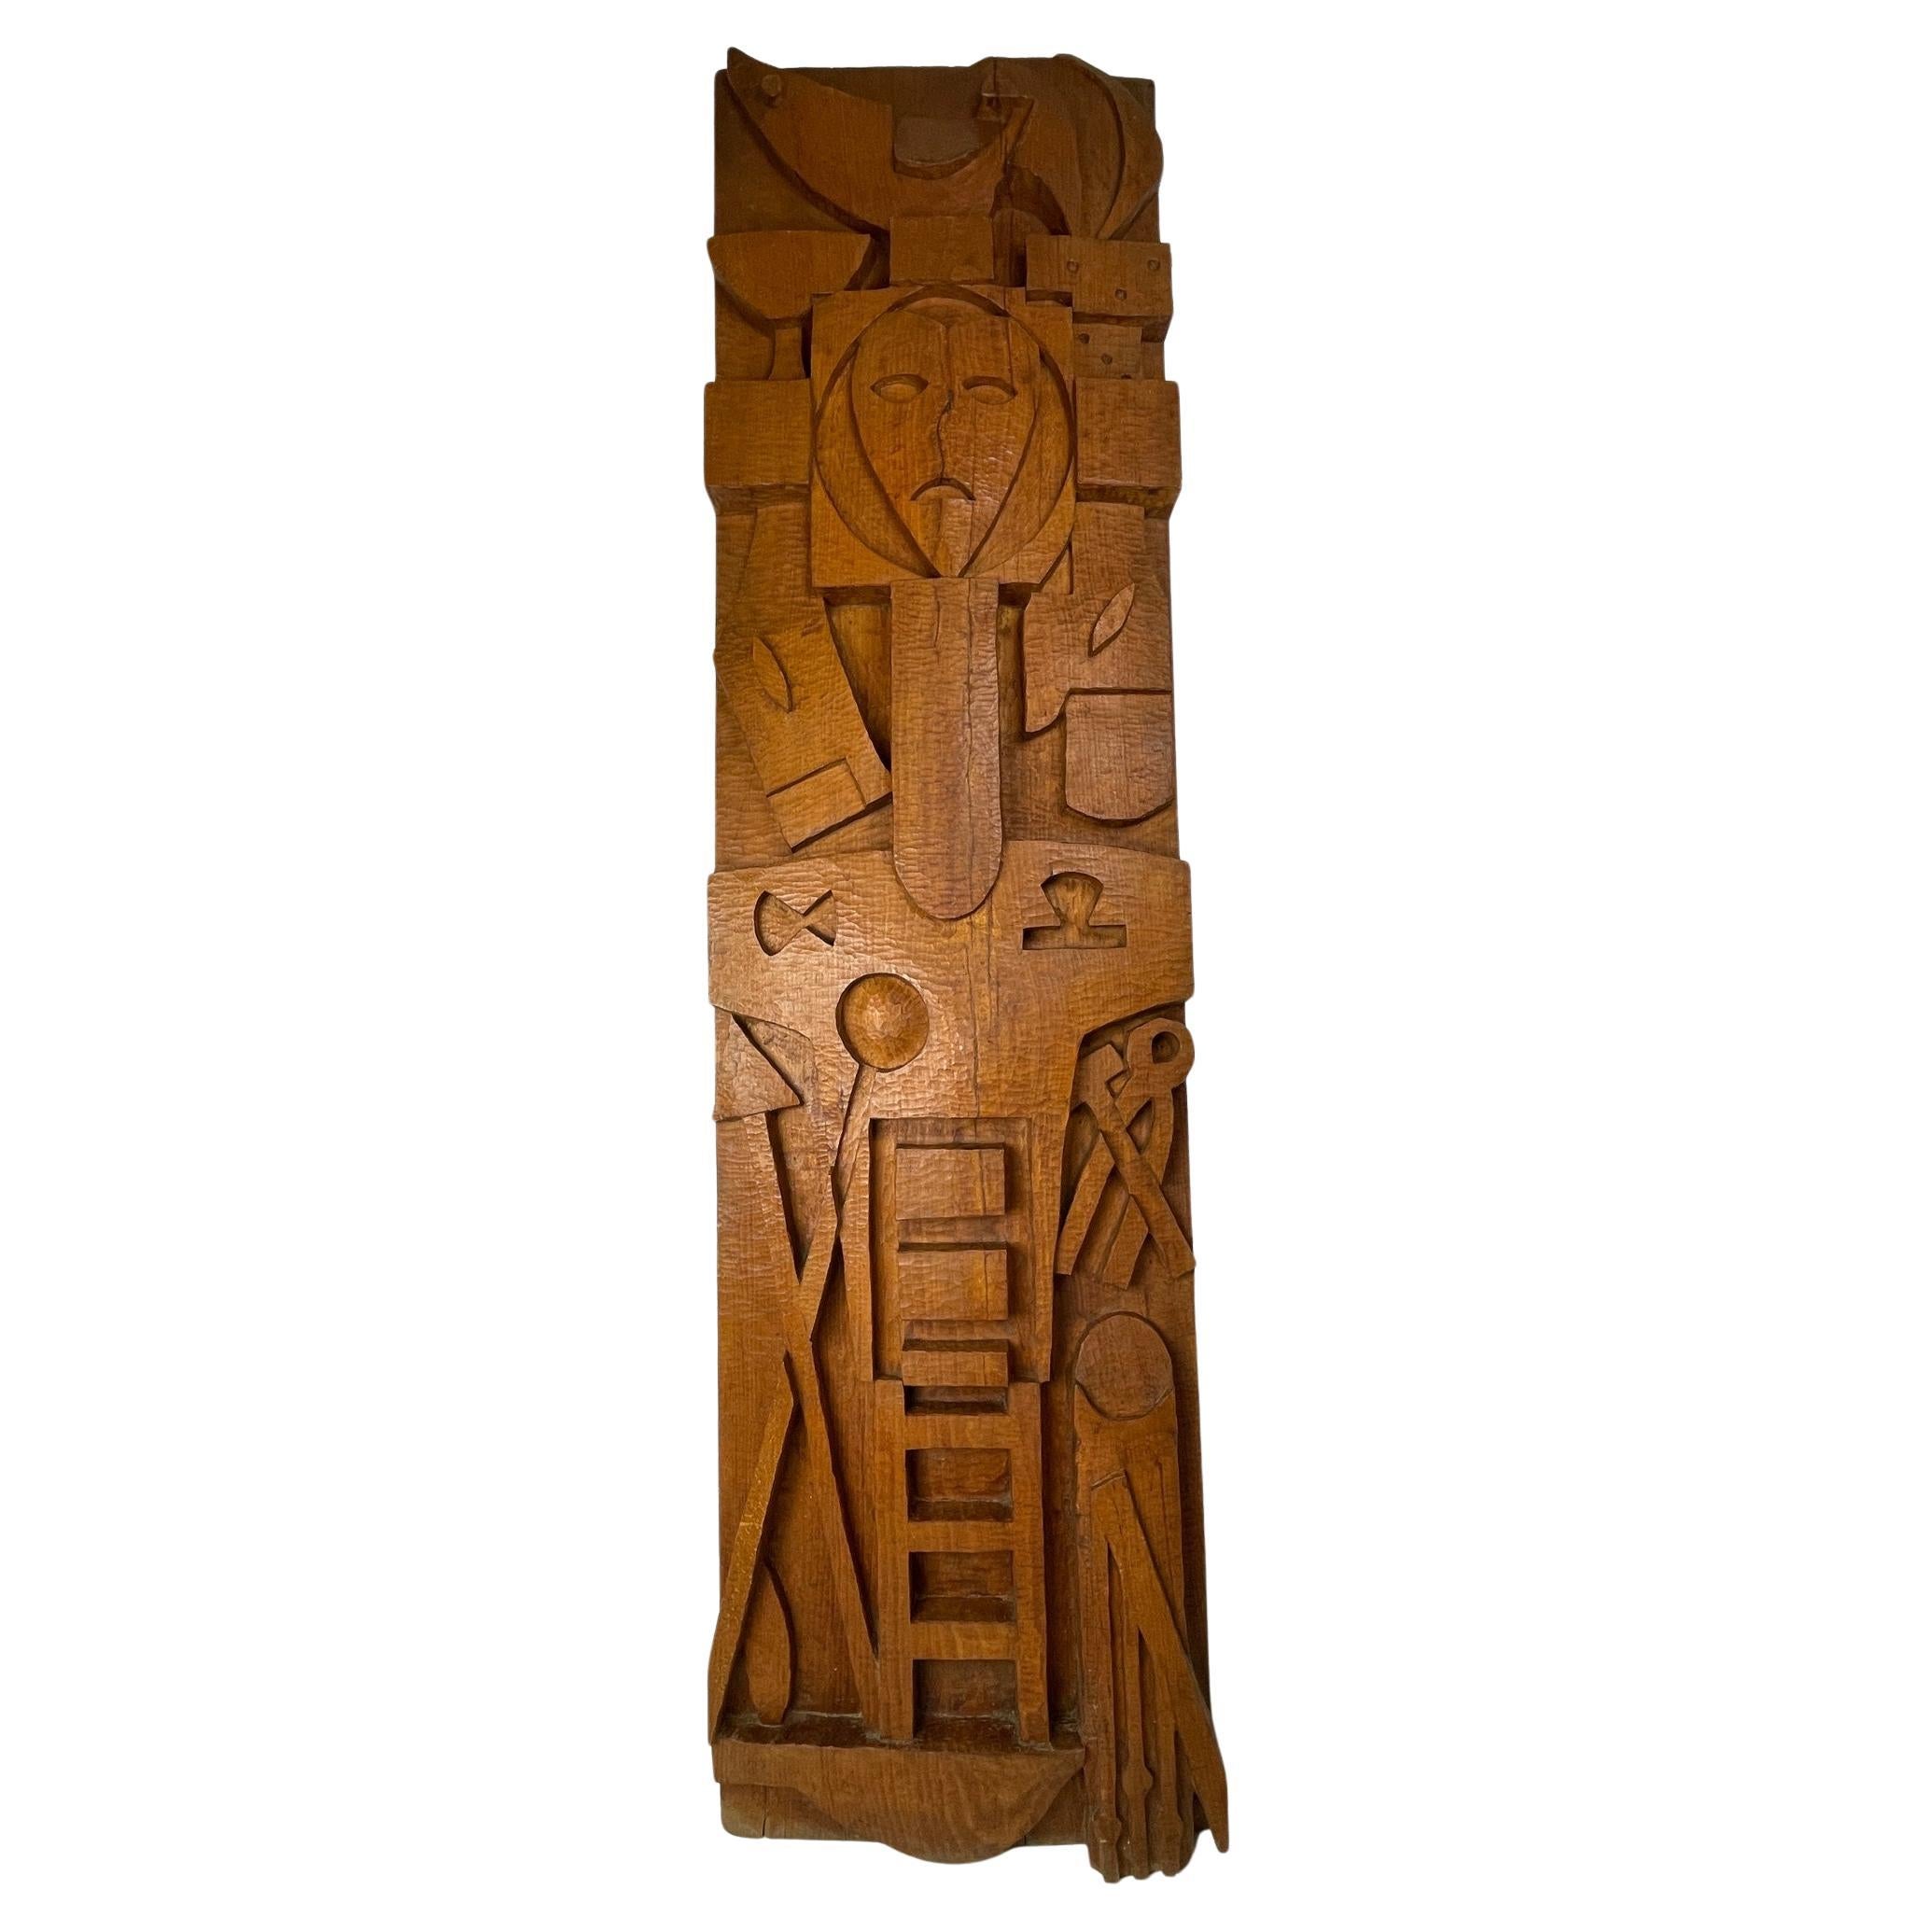 COR Trillen, Arma Christi, Religious Art, 1960s, Wooden Carving, Unique Art Work For Sale